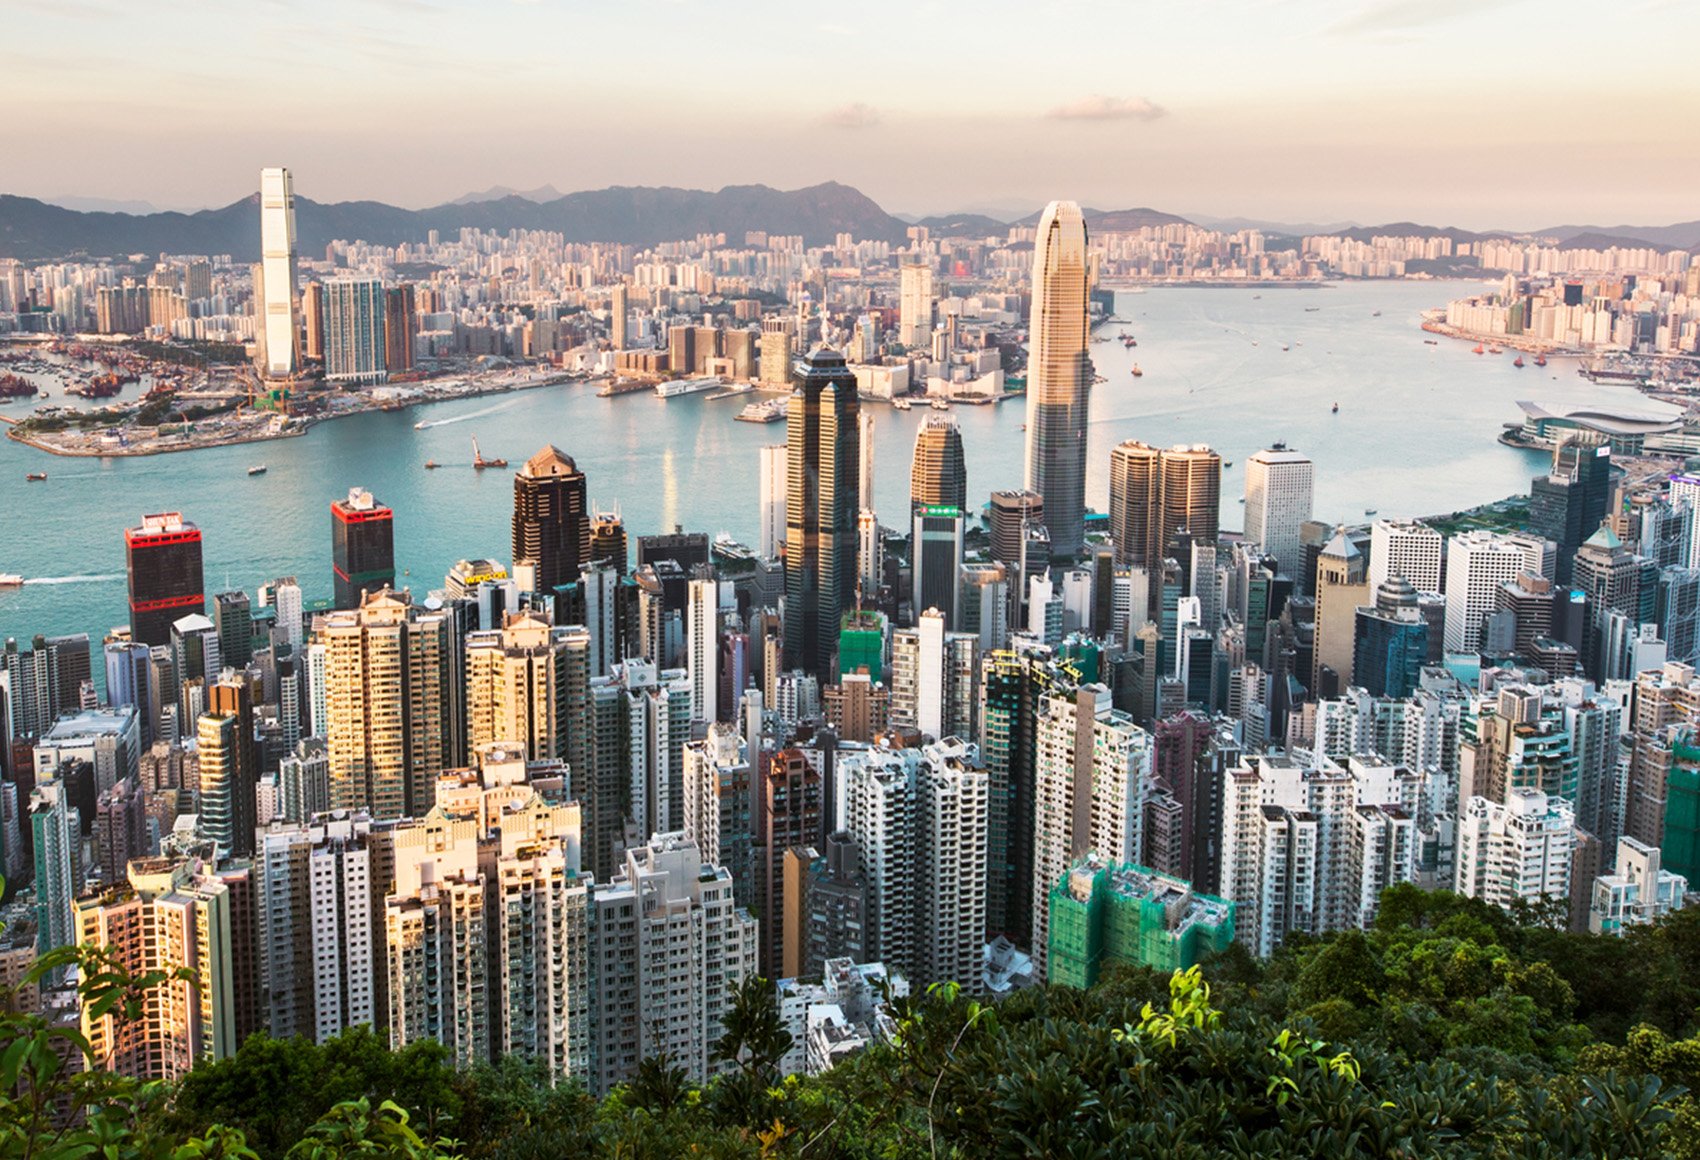 View of the Kowloon Peninsula in Hong Kong from Victoria Peak on Hong Kong Island